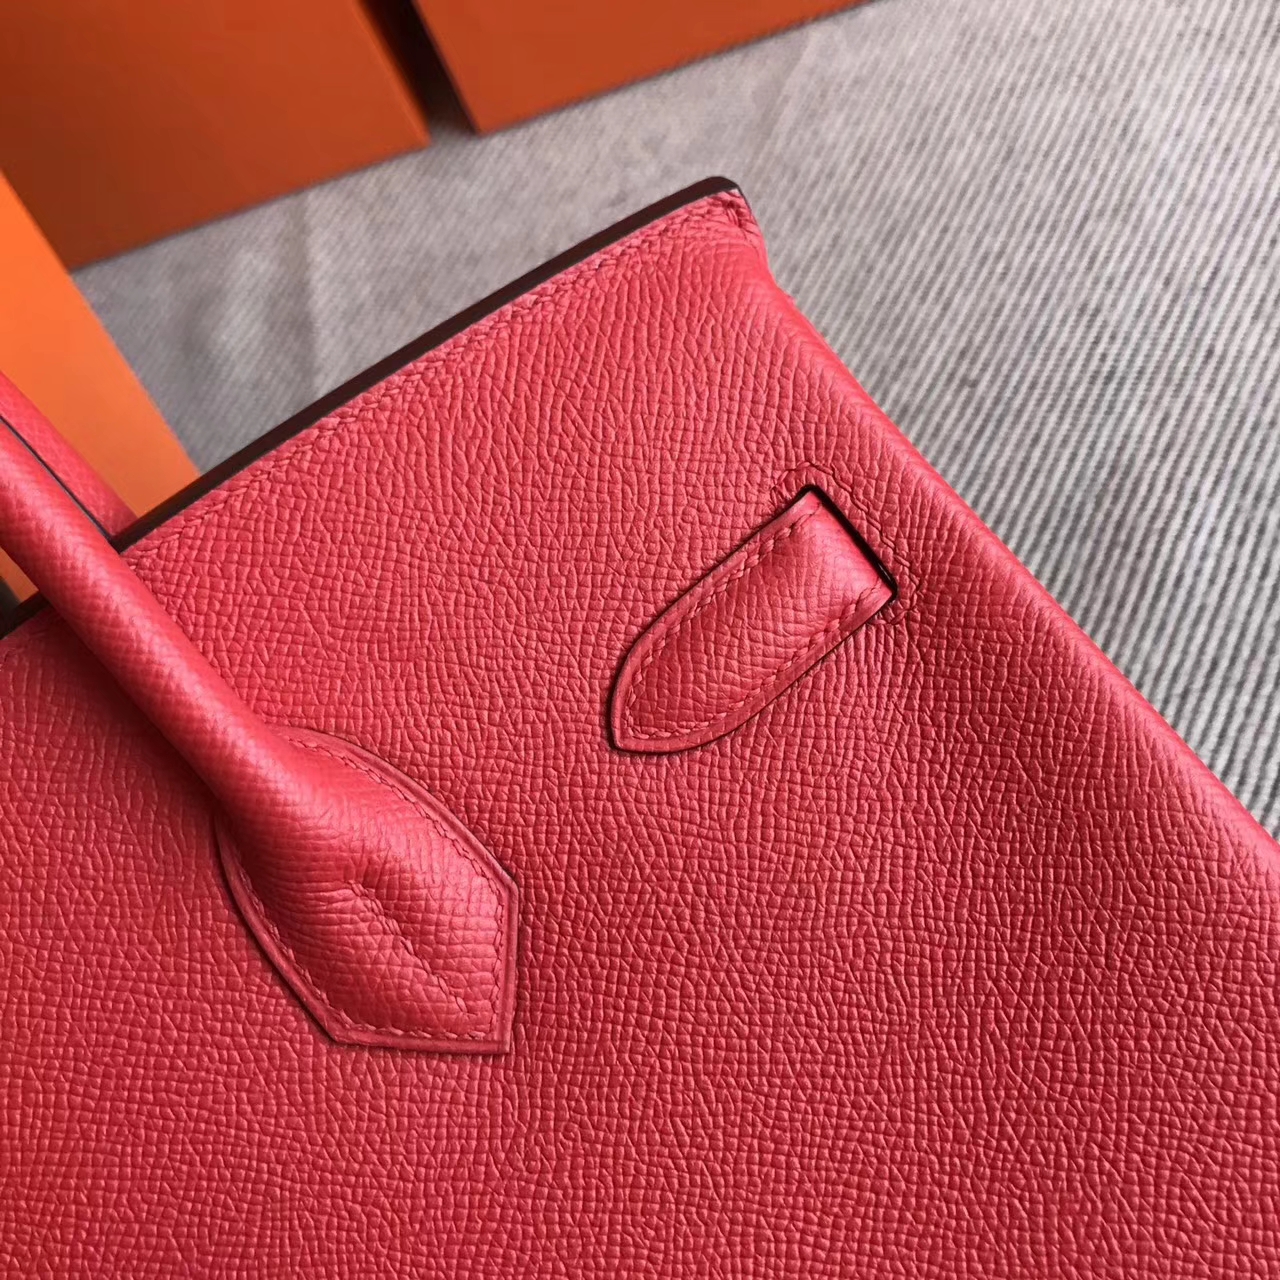 New Pretty Hermes Epsom Leather Birkin30cm Bag in T5 Peach Pink